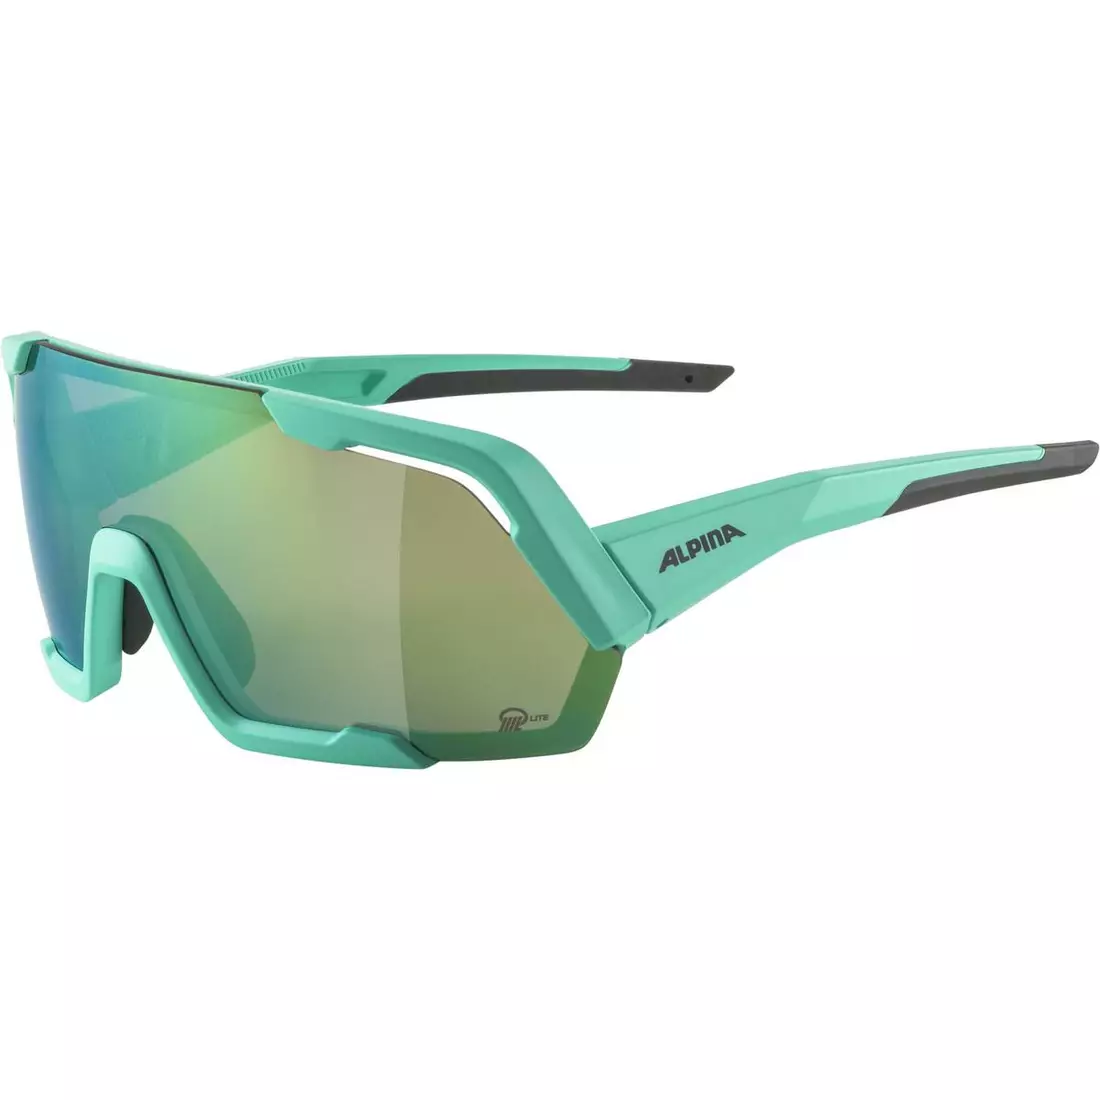 ALPINA ROCKET Q-LITE Polarized cycling / sports glasses TURQUOISE MATT MIRROR GREEN 